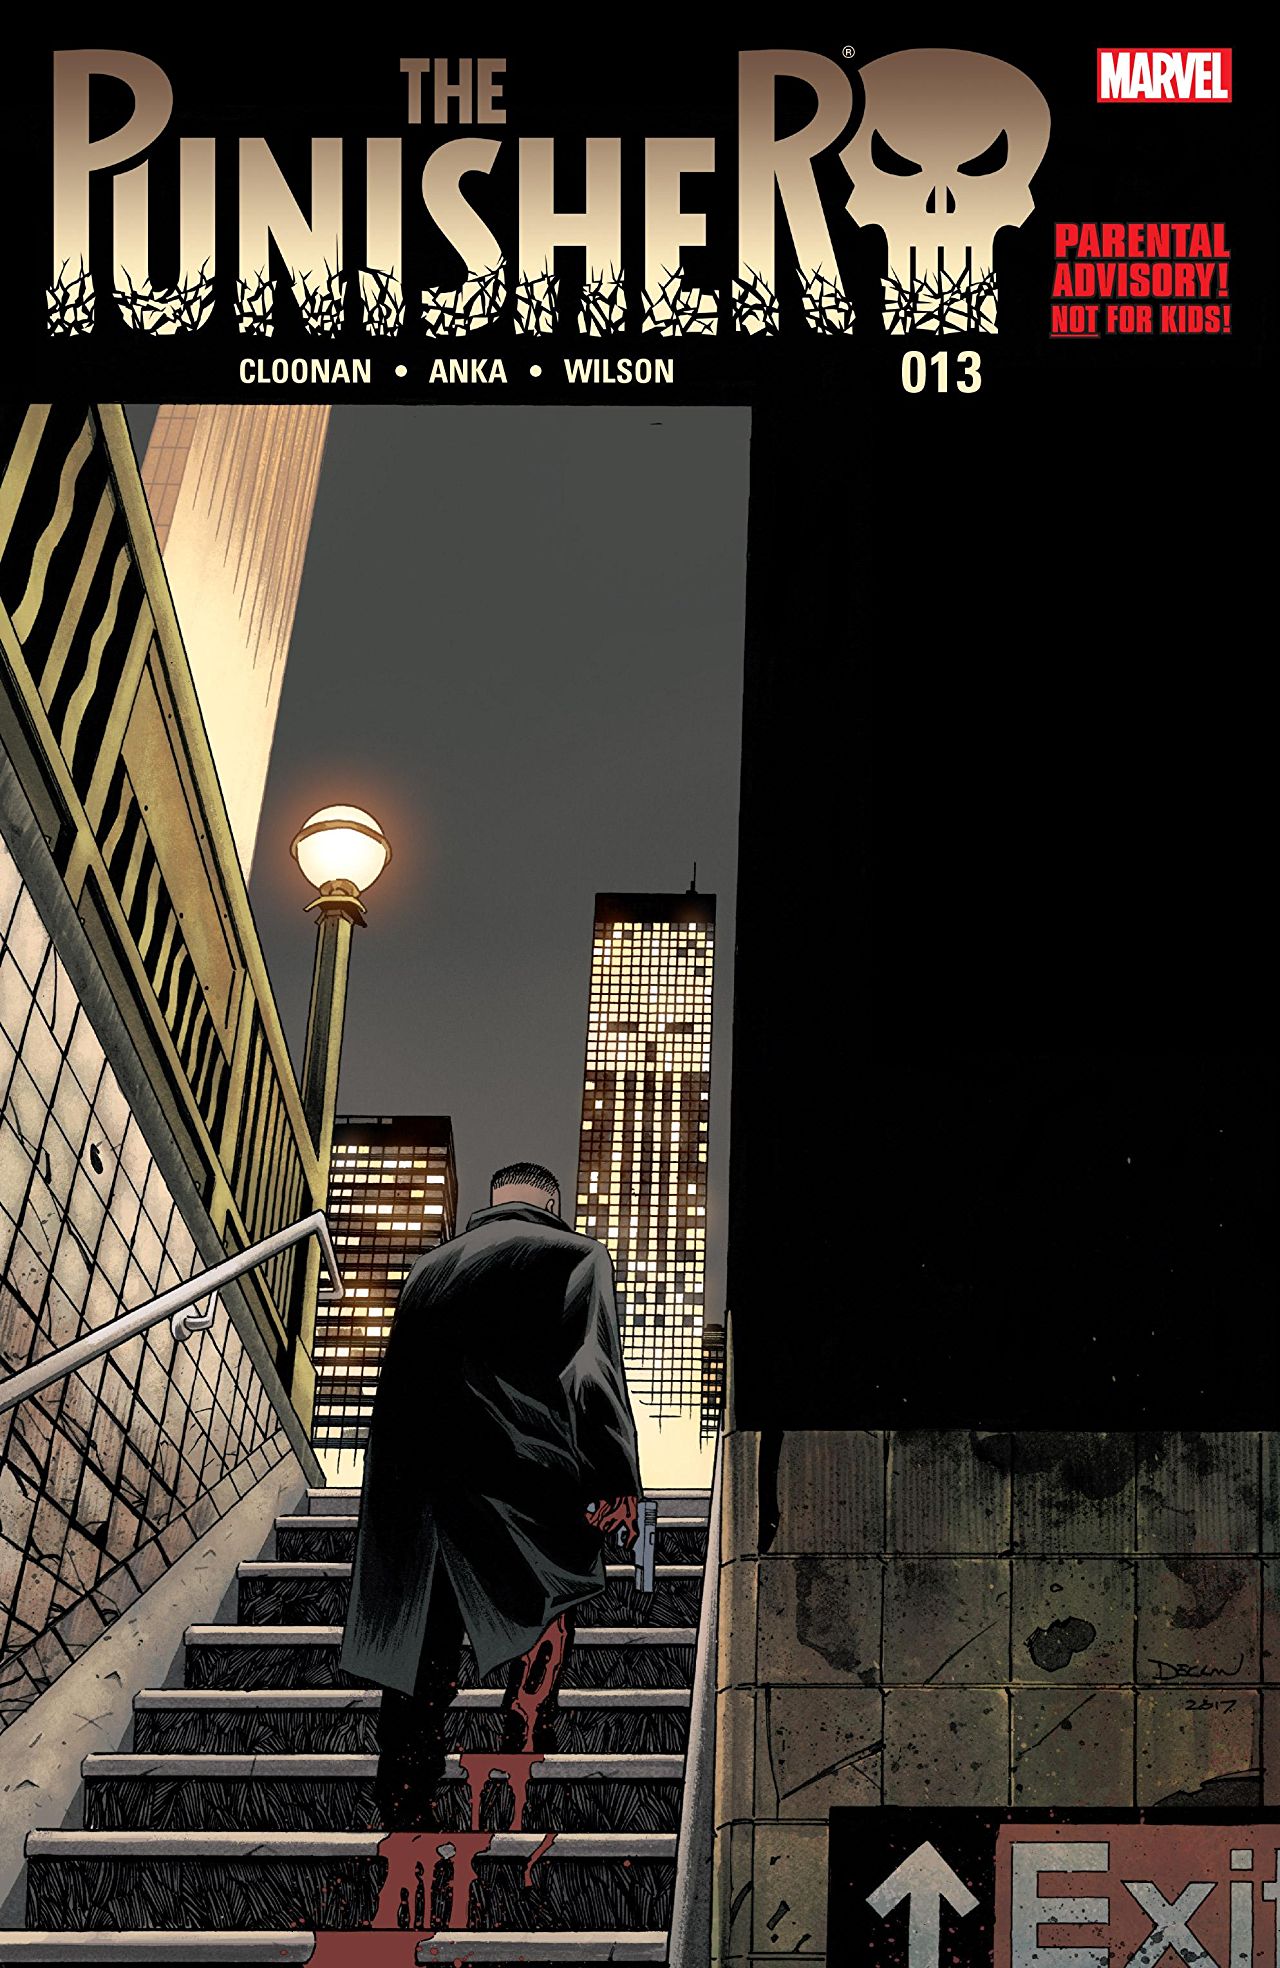 The Punisher #13, Marvel Comics